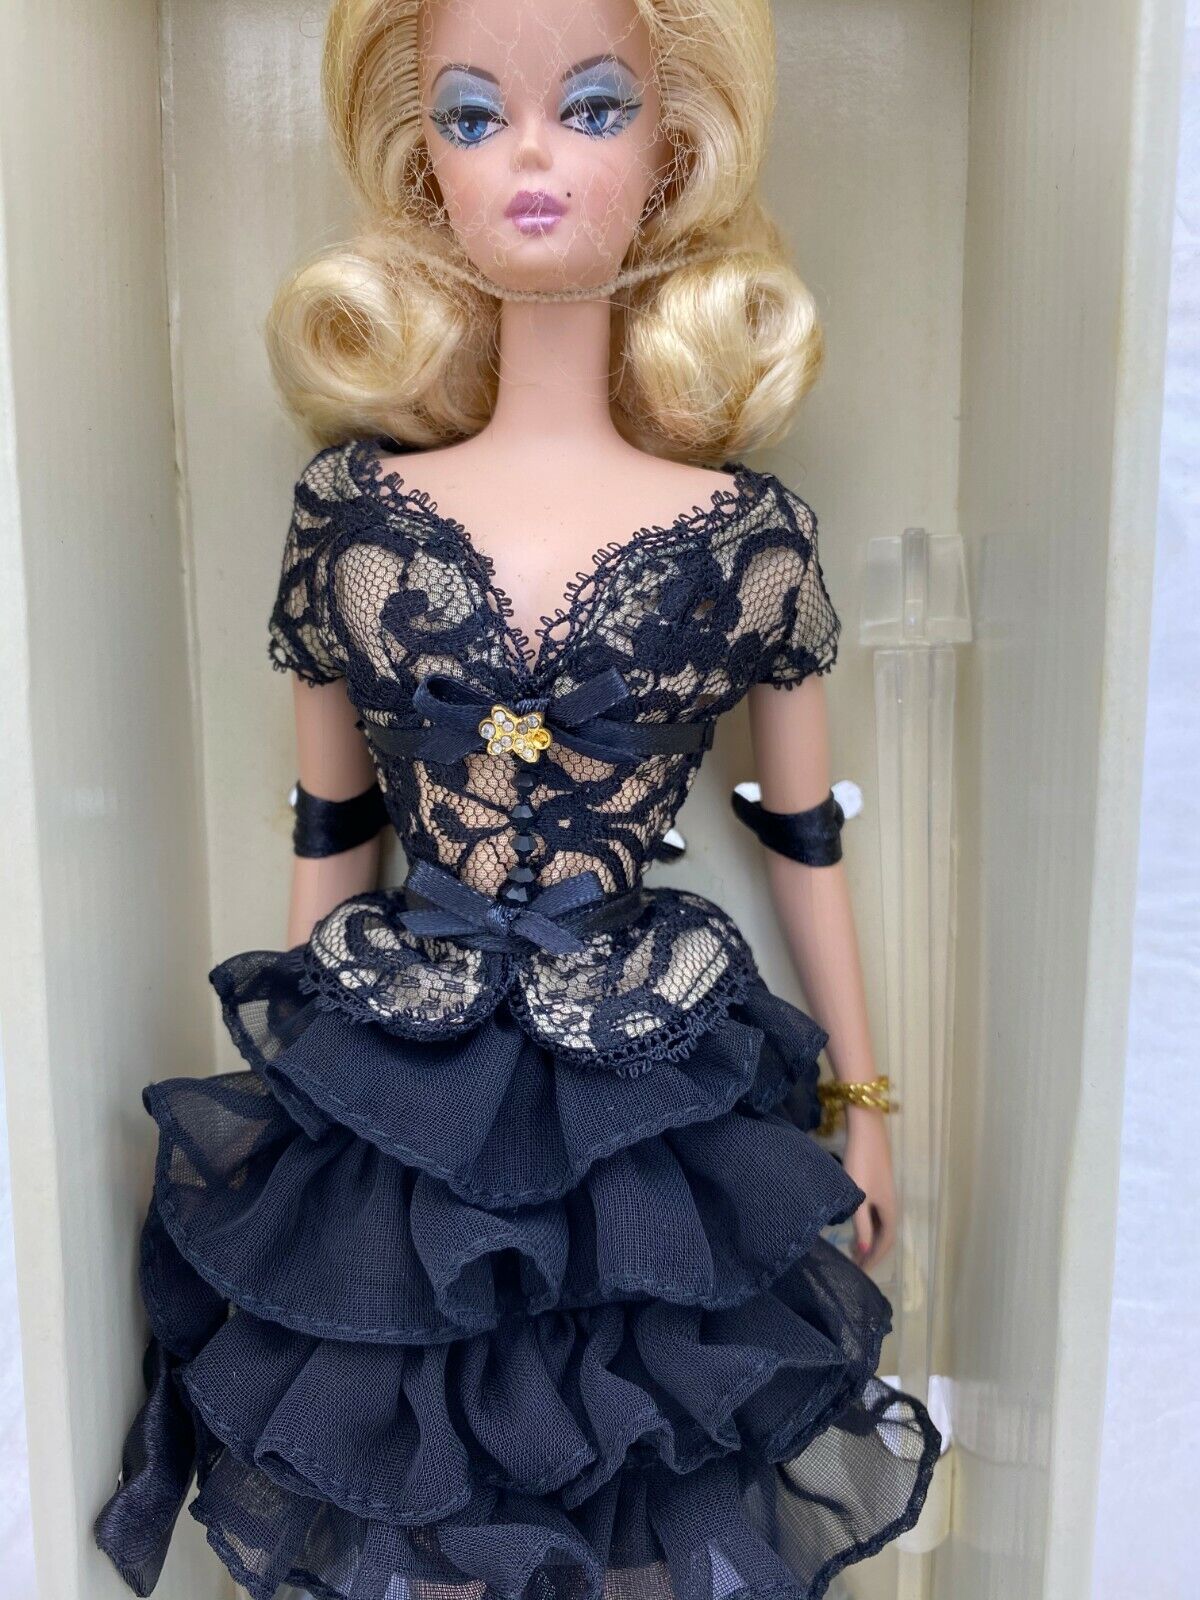 A Trace of Lace Doll Silkstone Barbie Blonde Platinum Label Japan Exclusive Fashion Model Mattel